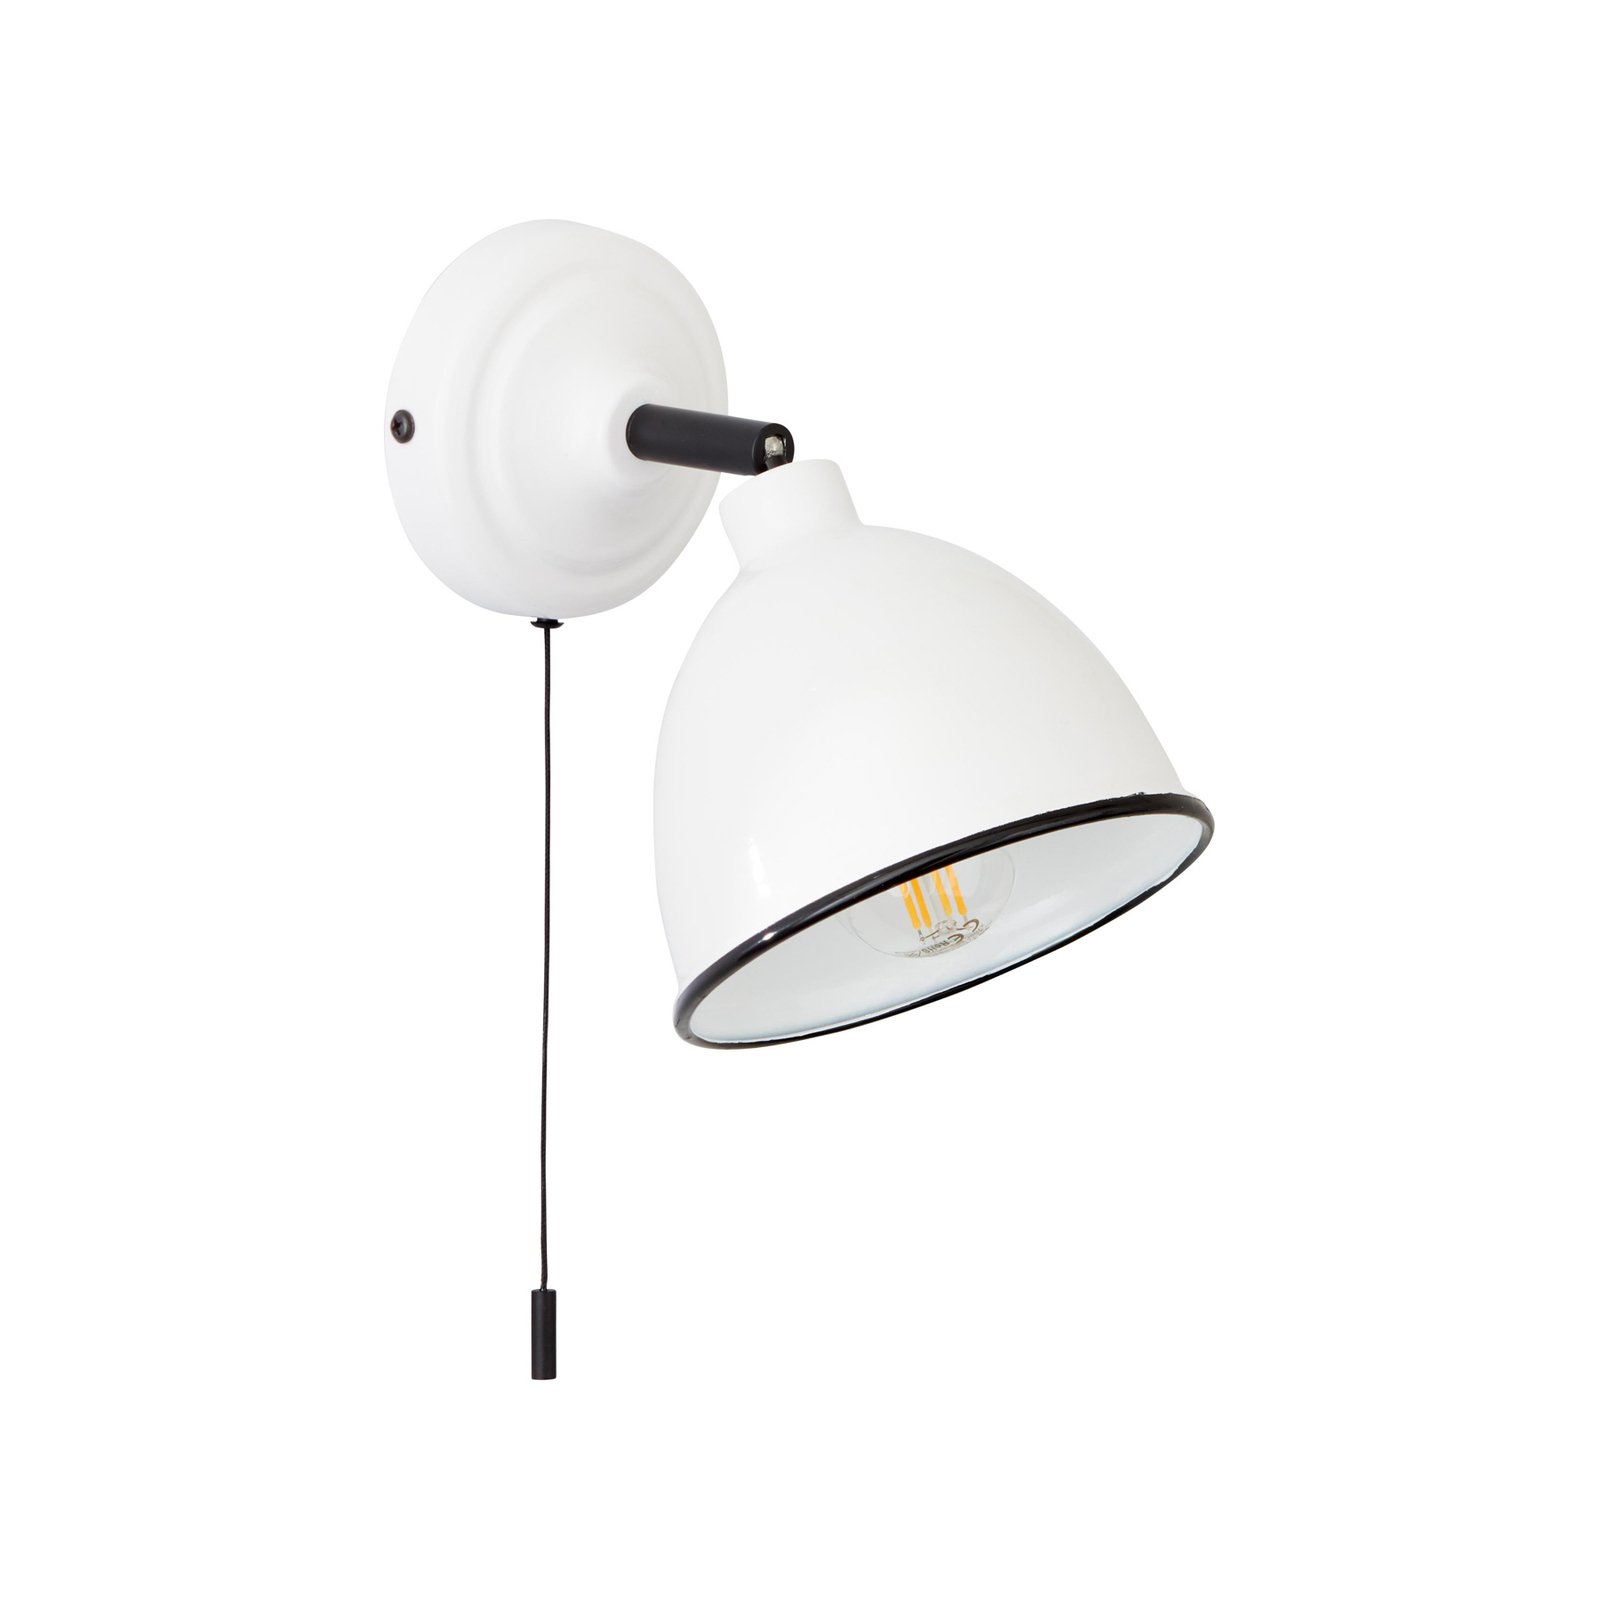 Telio wall light, white, width 12.5 cm, metal